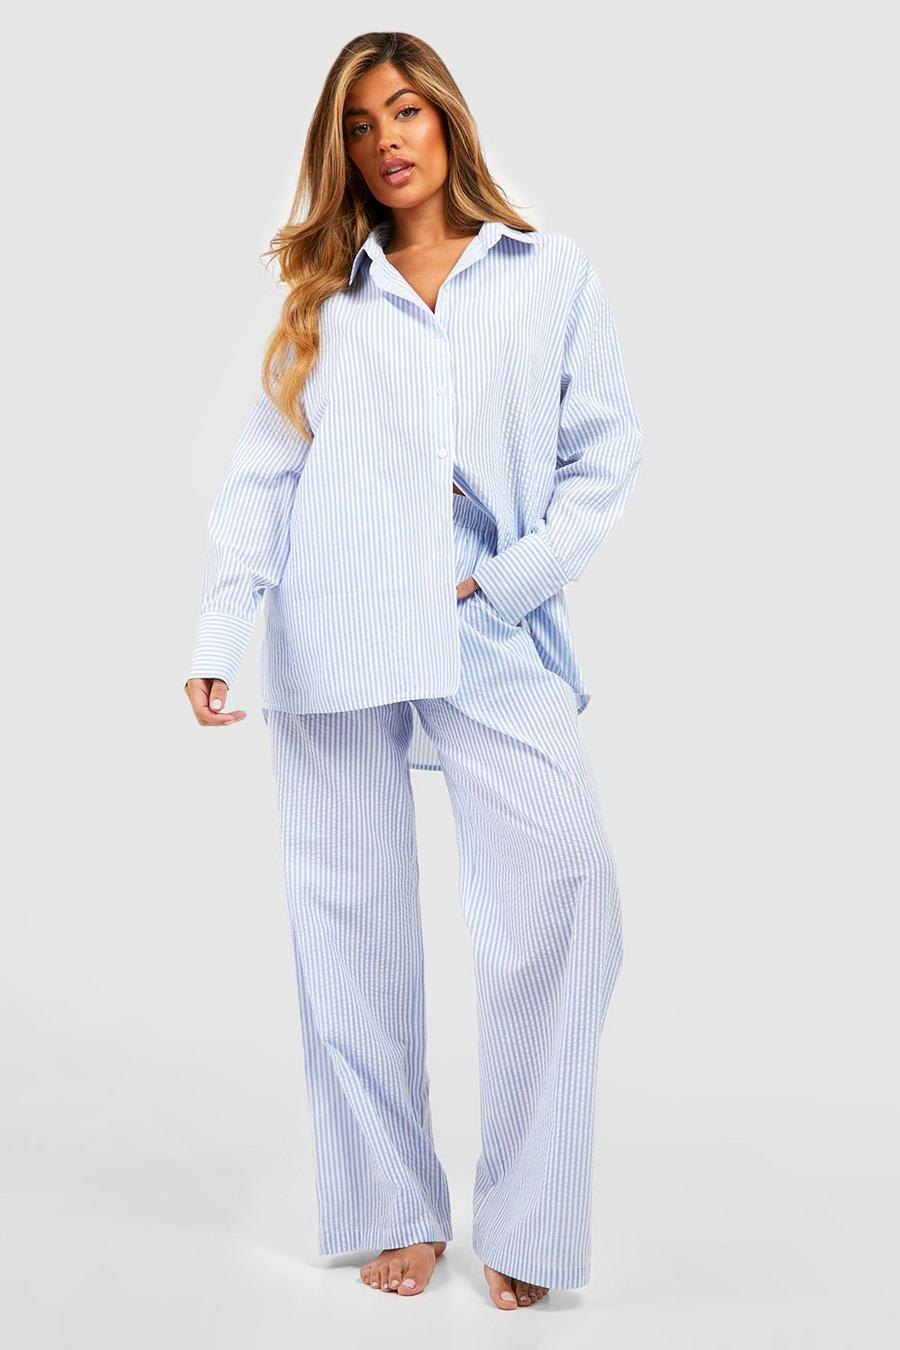 https://media.boohoo.com/i/boohoo/gzz54069_blue_xl/female-blue-cotton-pinstripe-pajama-pants/?w=900&qlt=default&fmt.jp2.qlt=70&fmt=auto&sm=fit